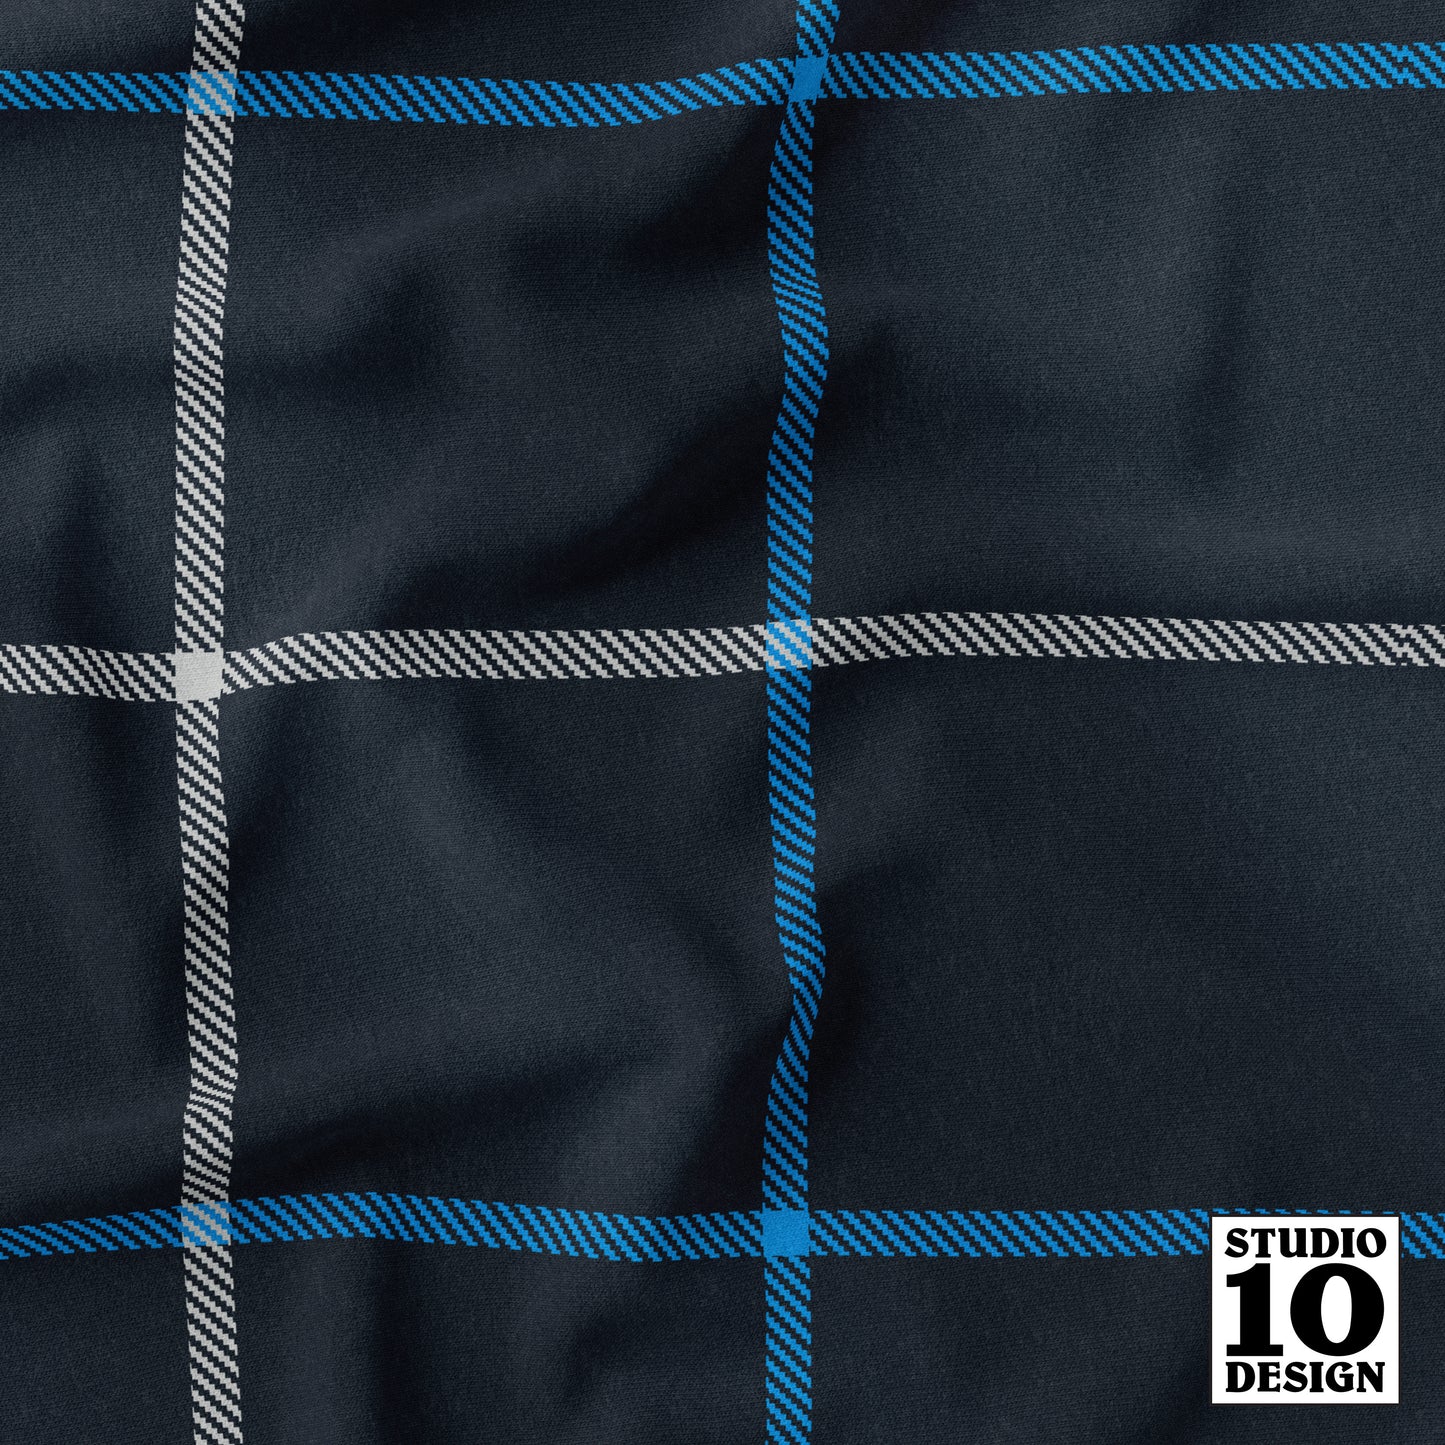 Team Plaid Carolina Panthers Football Printed Fabric by Studio Ten Design